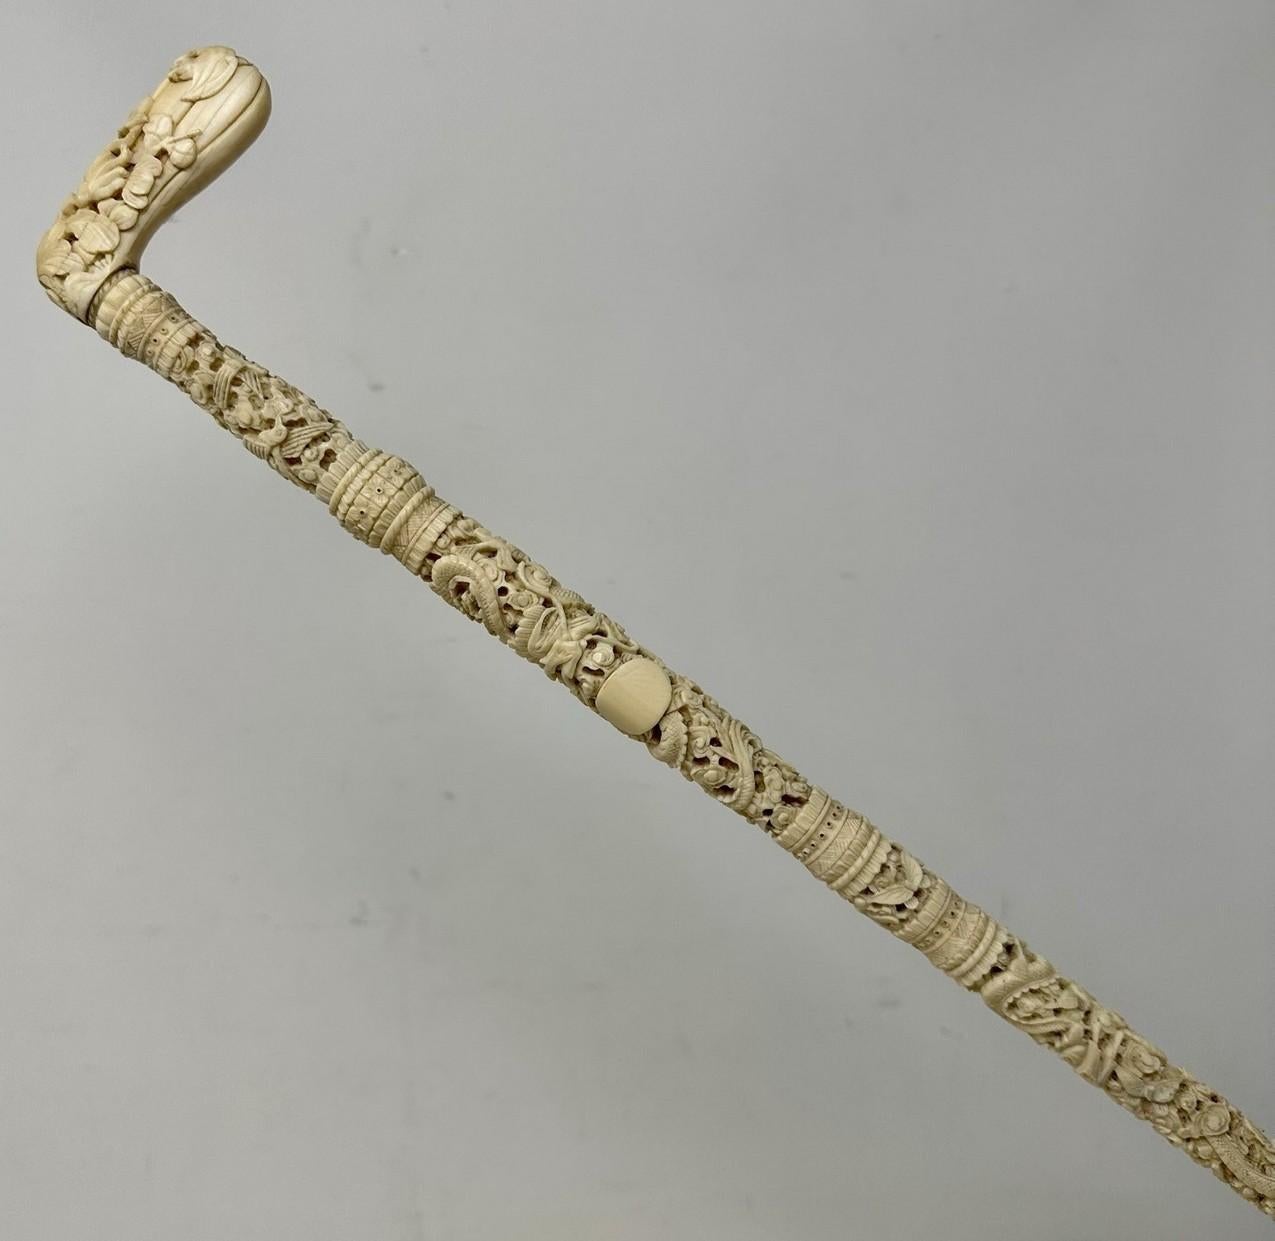 Horn Antique Victorian Vintage Chinese Ivory Bovine Walking Stick Cane Carved Dragon For Sale